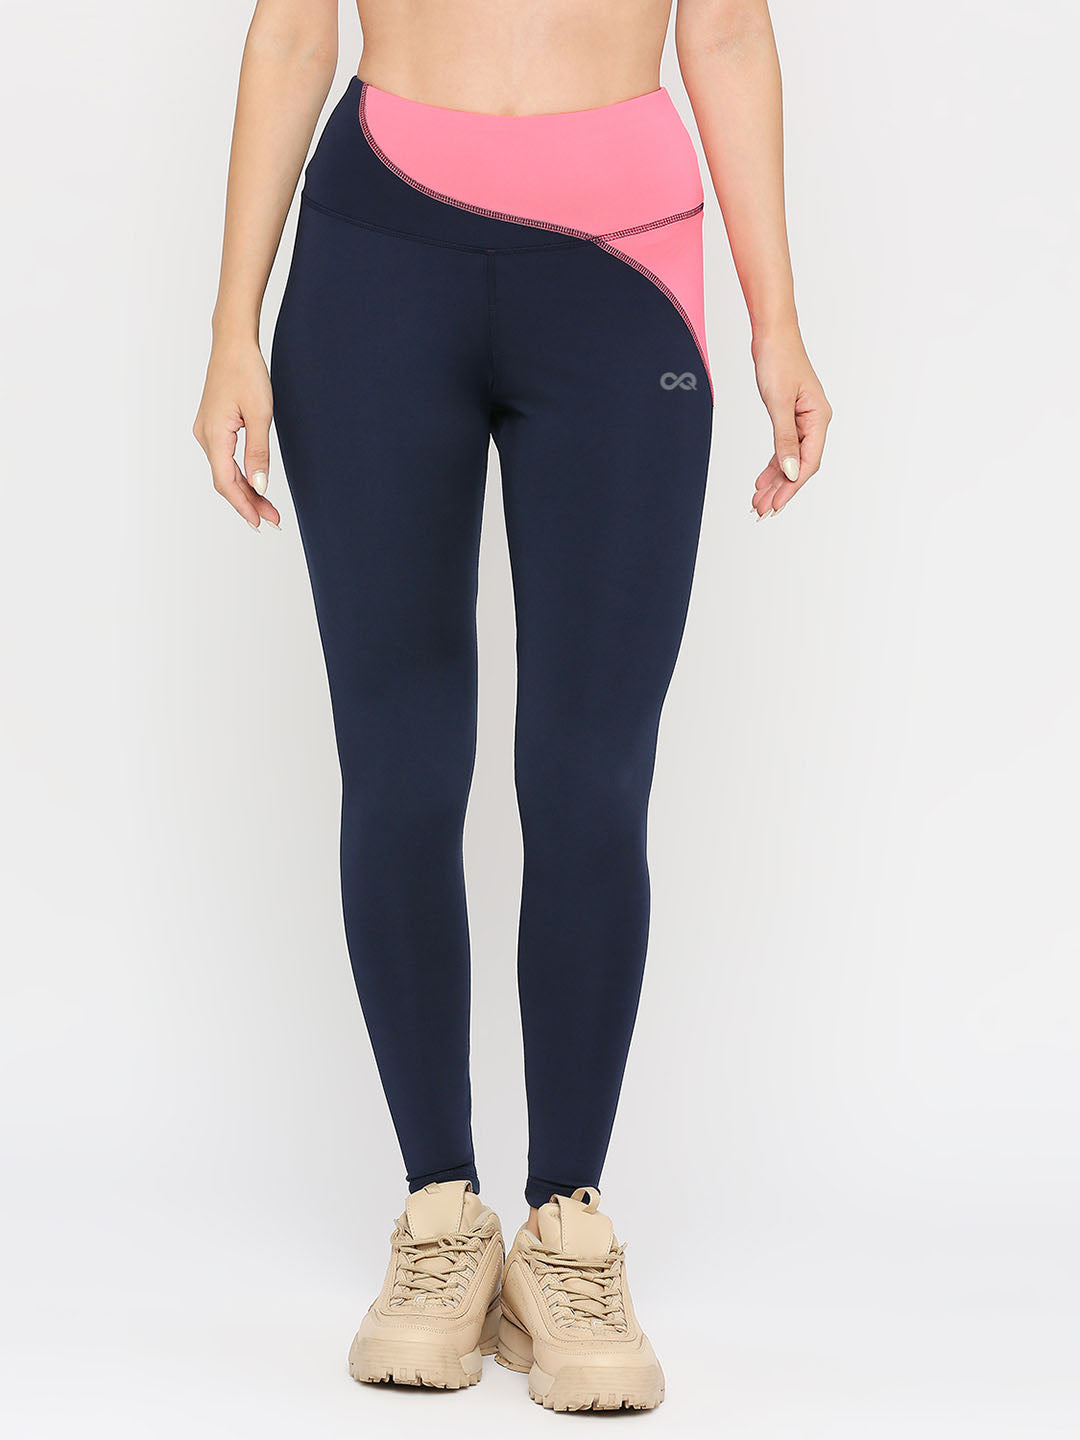 Women's Sports Leggings - Navy Blue & Pink